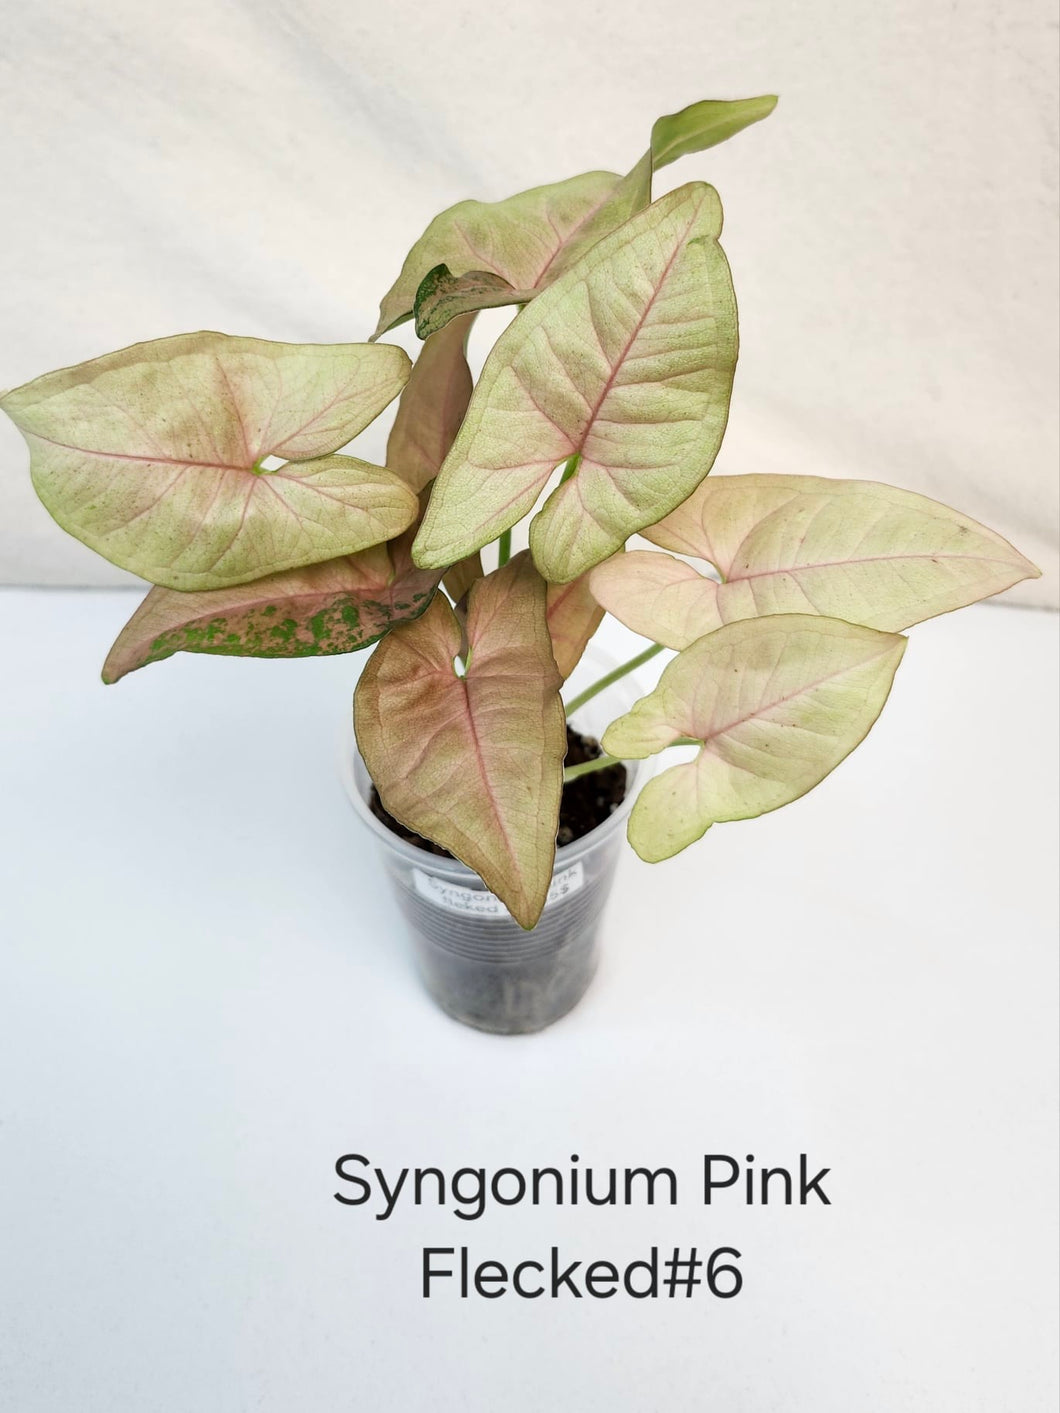 Syngonium pink fleked #6